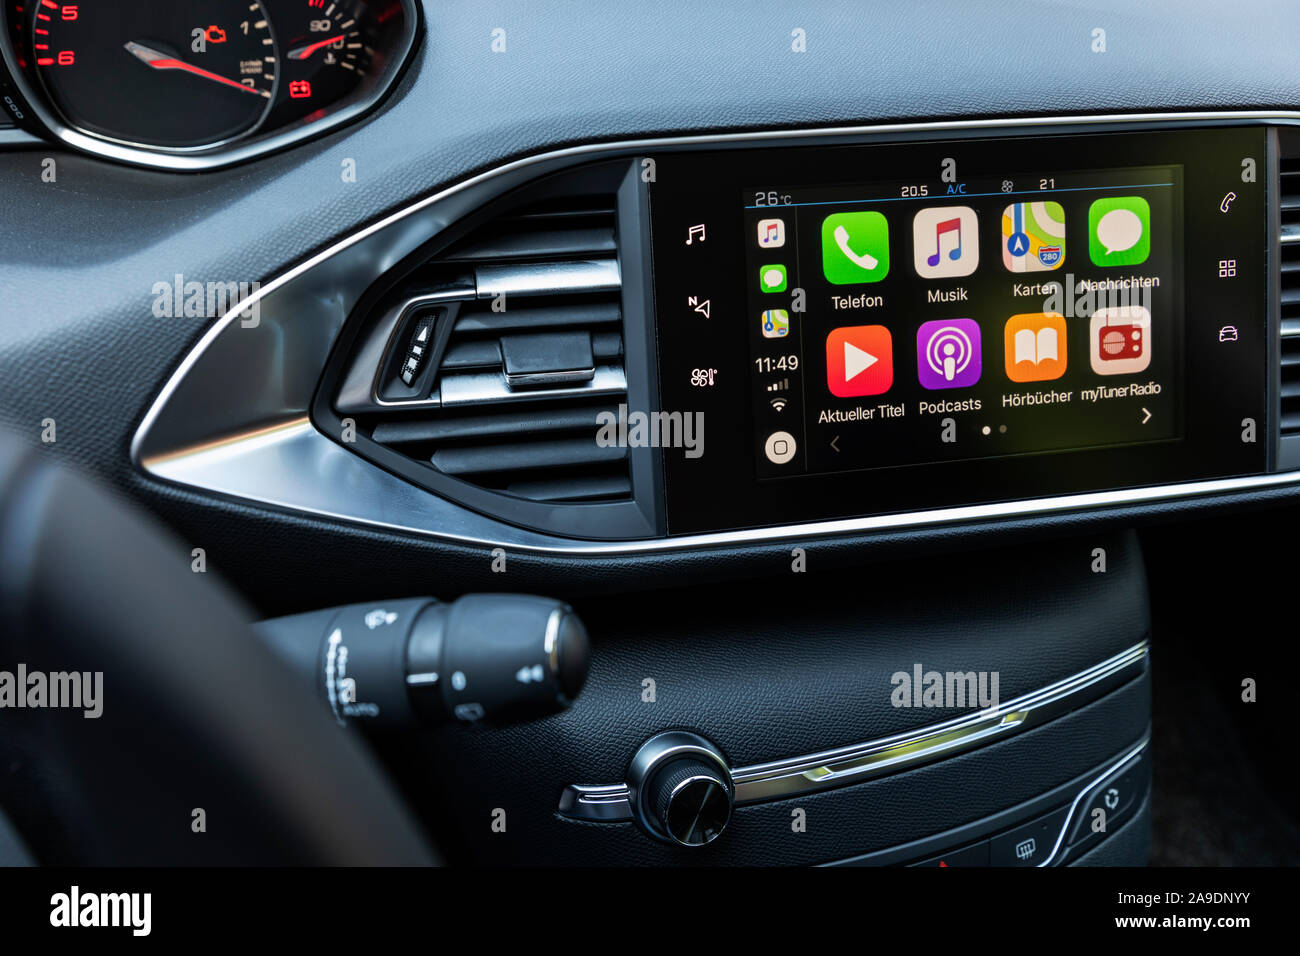 https://c8.alamy.com/comp/2A9DNYY/apple-carplay-display-touchscreen-dashboard-iphone-x-car-peugeot-308-2A9DNYY.jpg